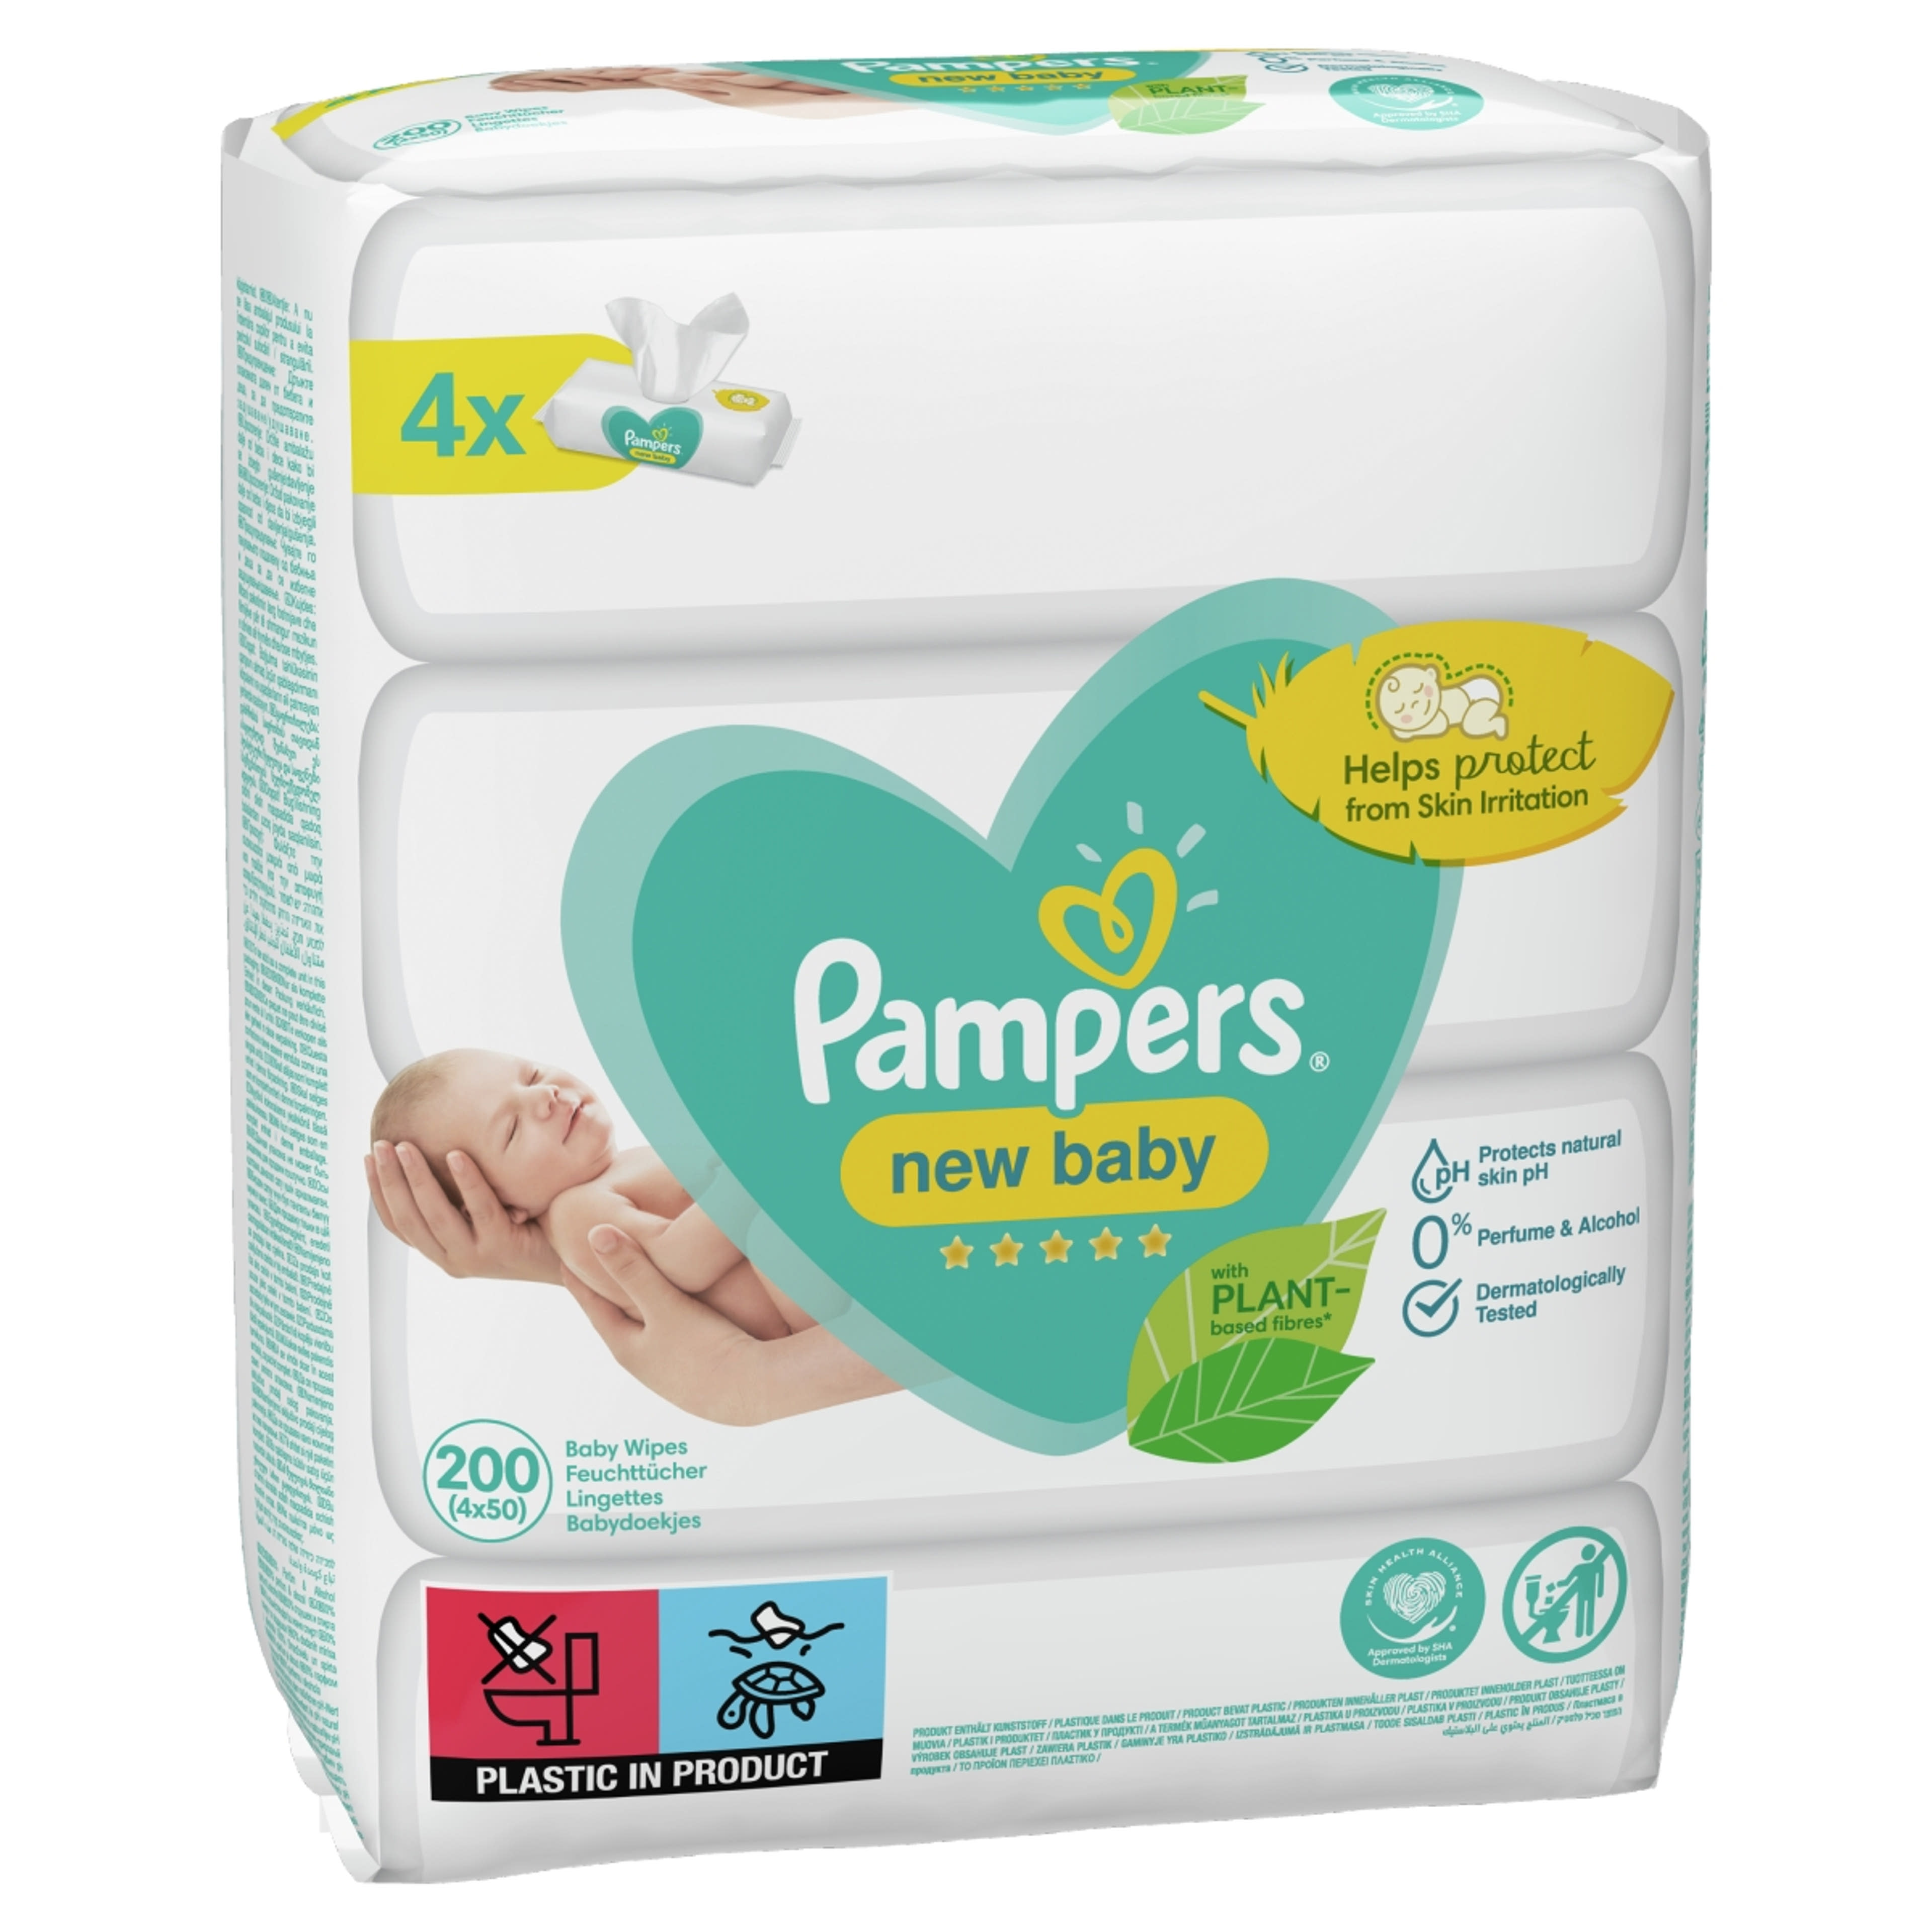 Pampers Sensitiv New Baby törlőkendő (4x50) - 200 db-2